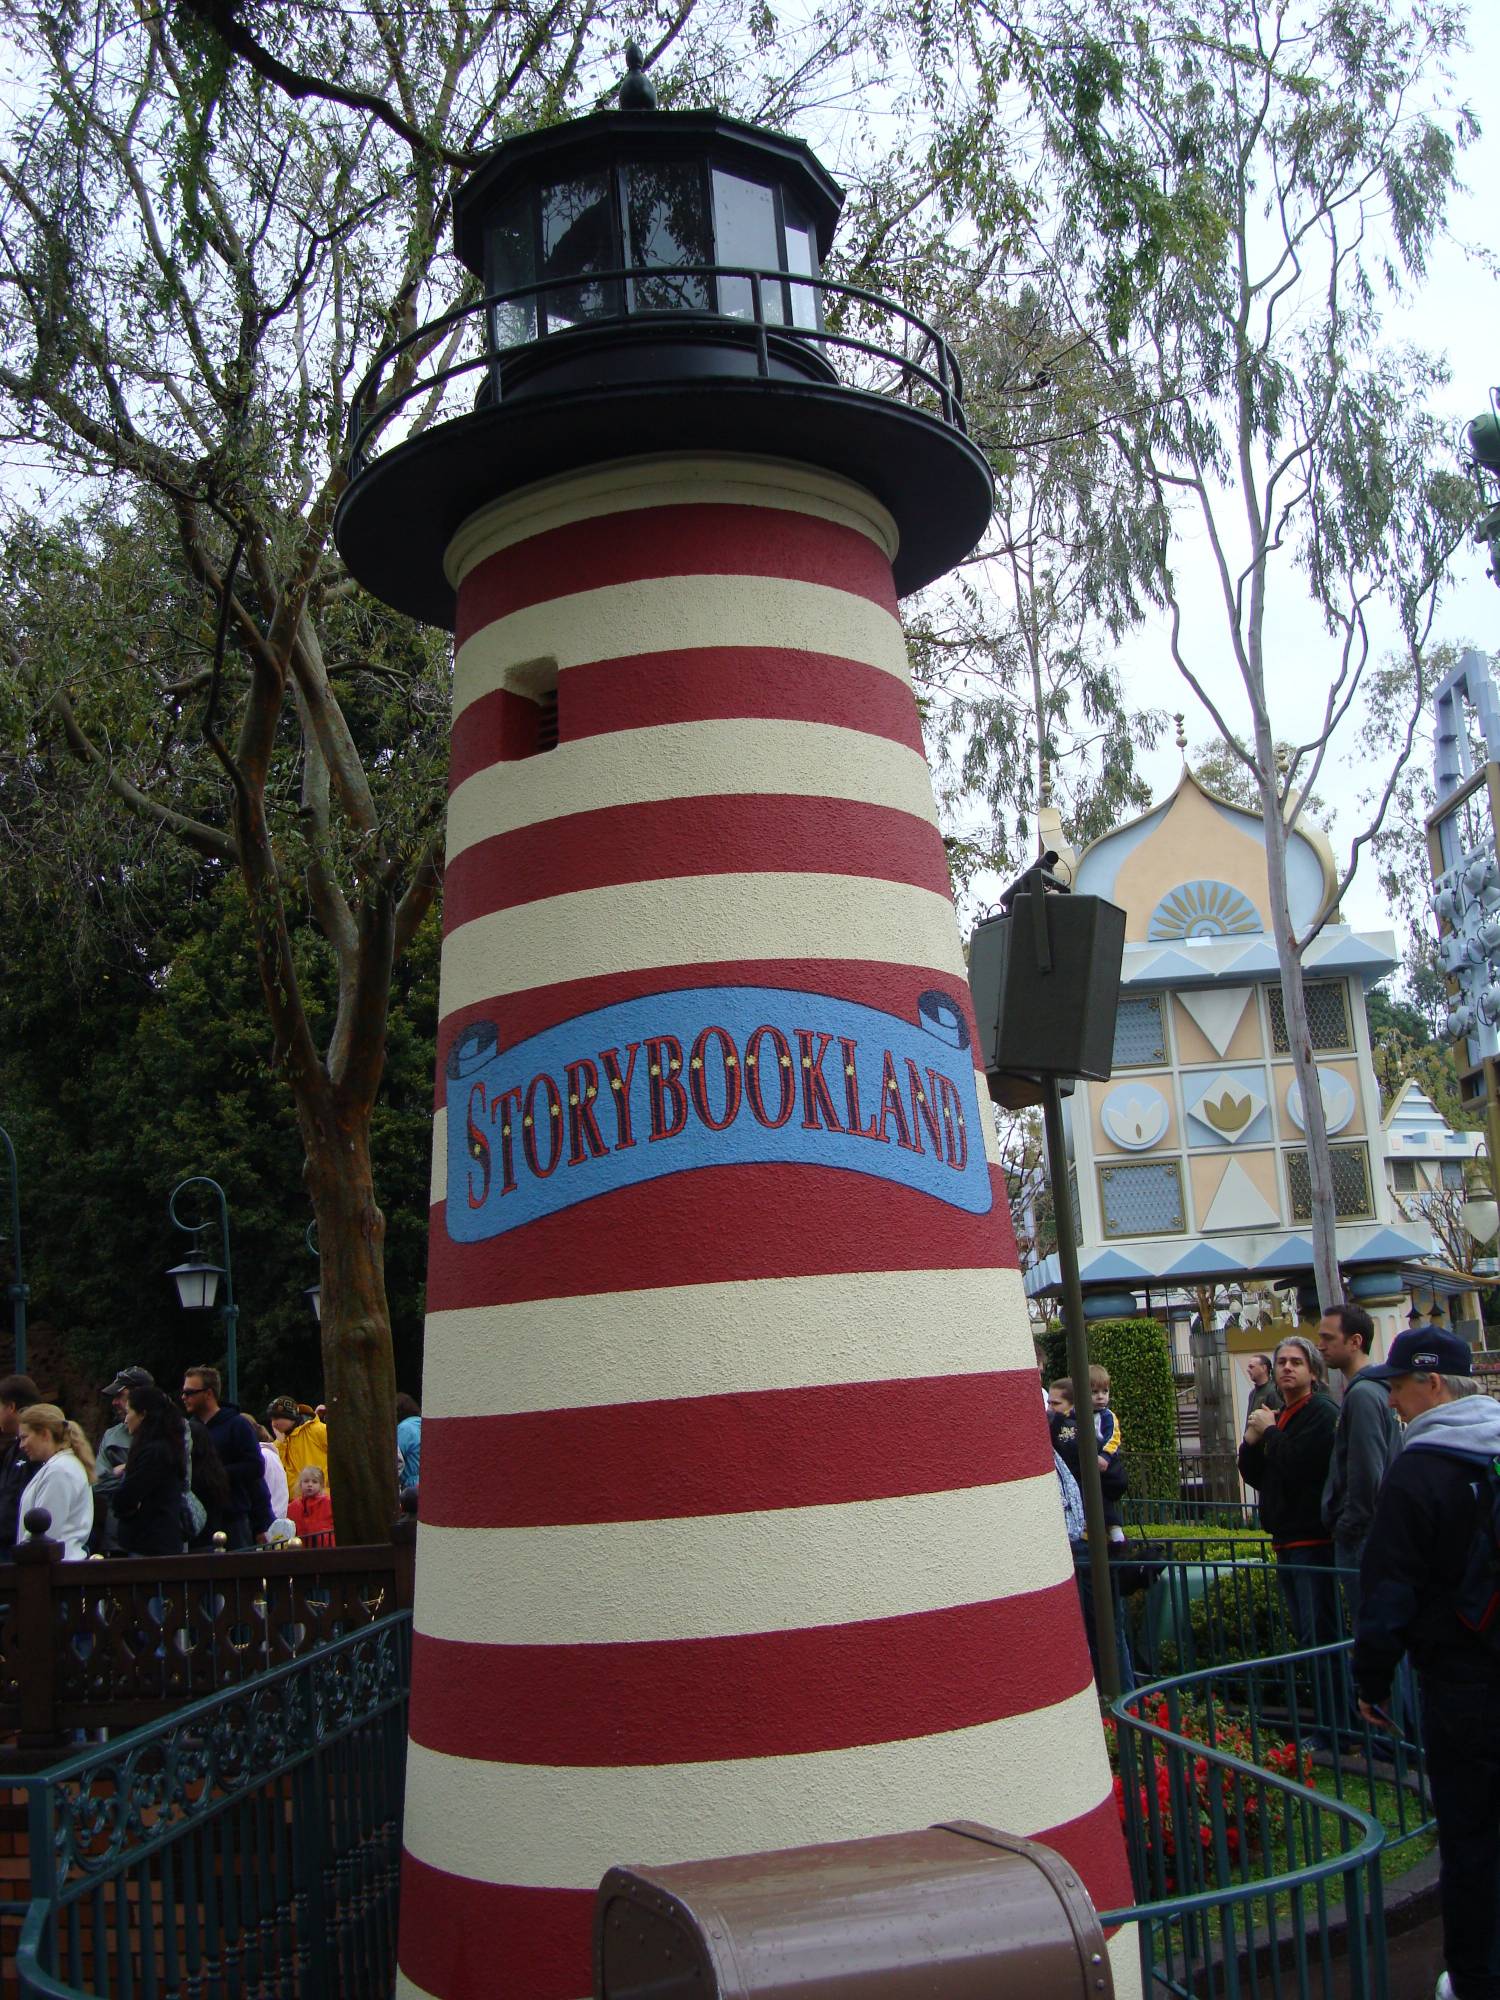 Fantasyland - Storybookland Lighthouse